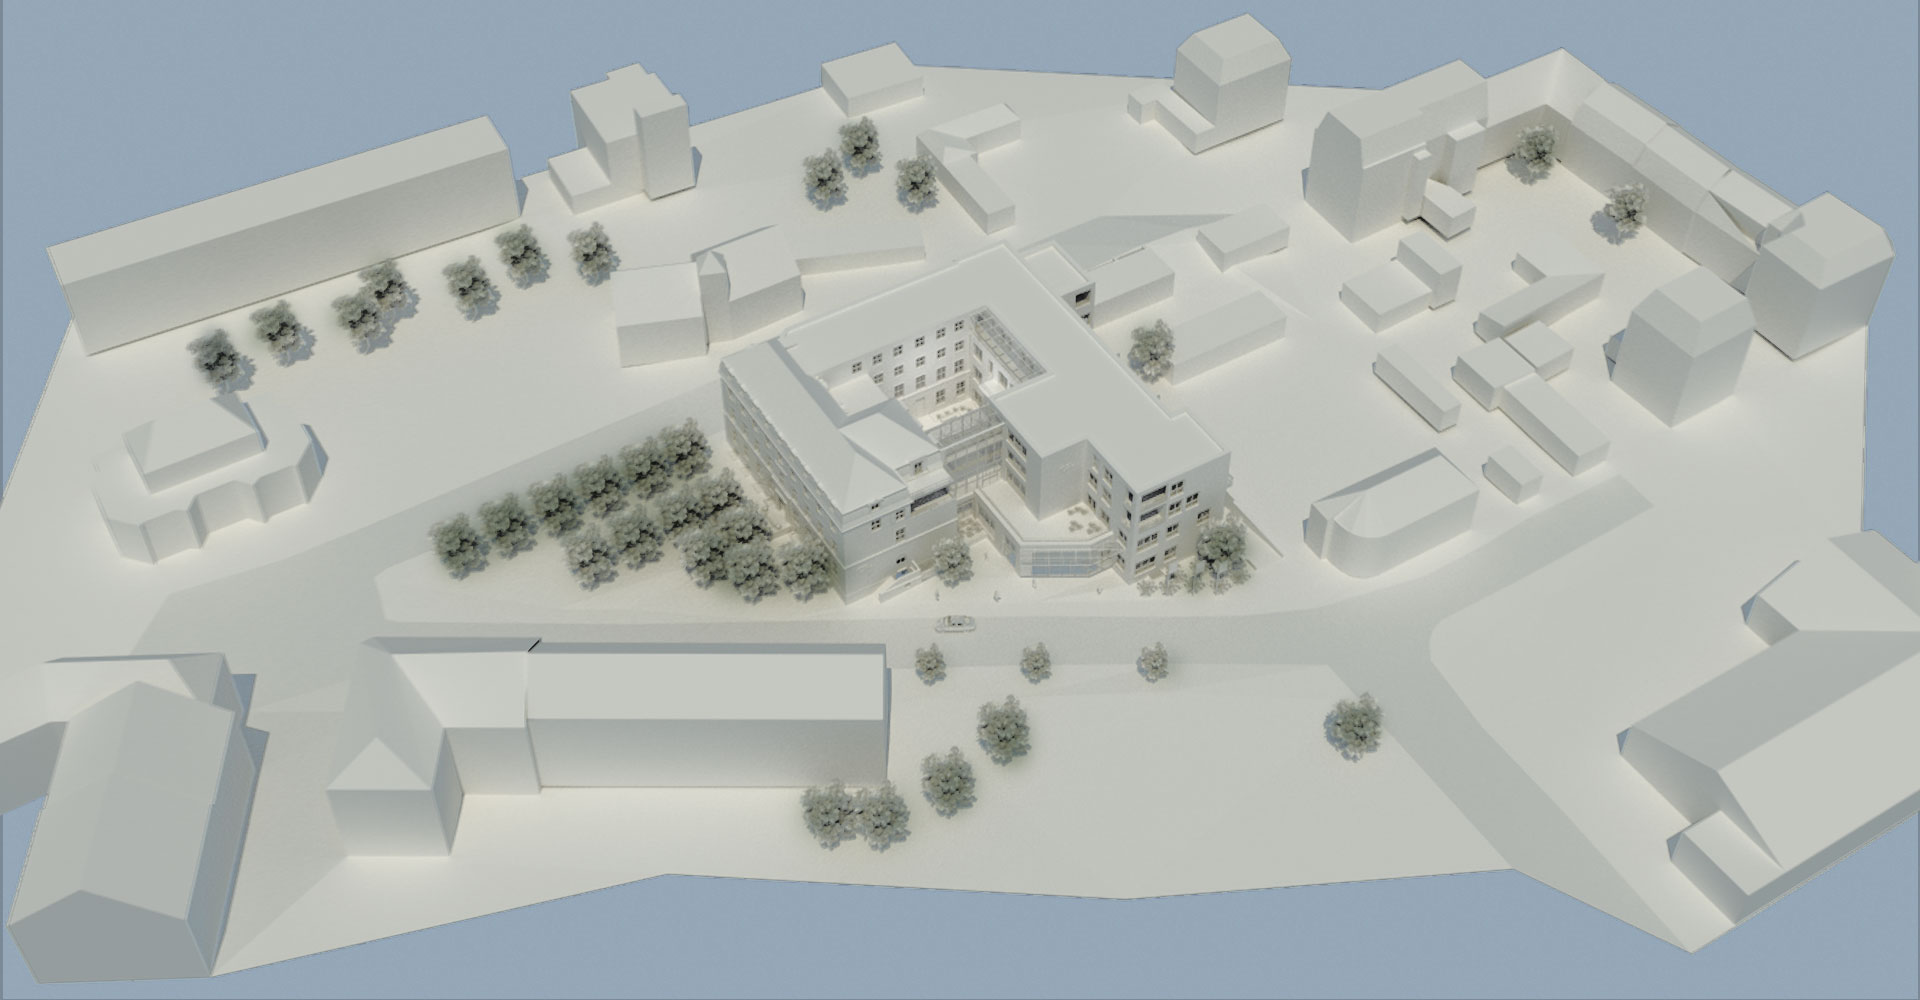 Modell 1 Senioren Quartier Oelsnitz, mga consult Rheinbreitbach, Konzeption und Planung